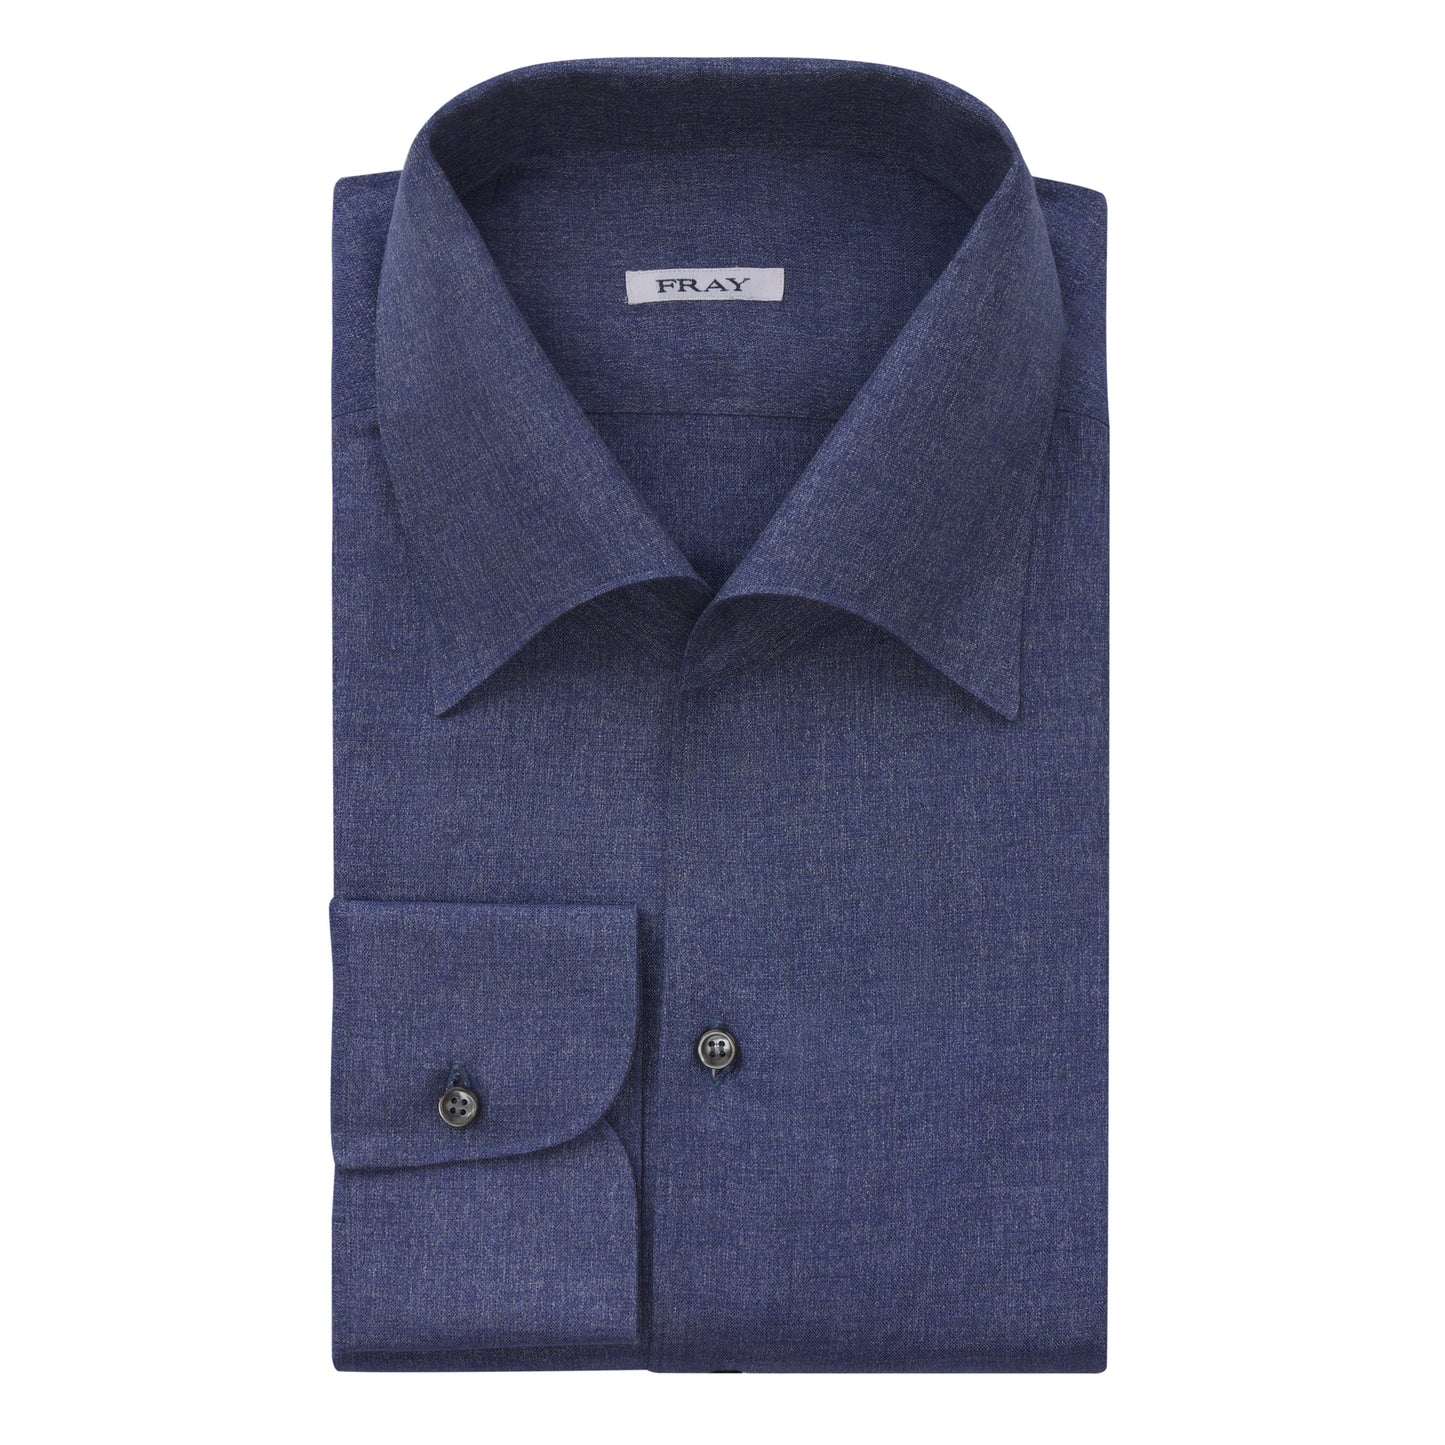 Linen-Cotton Shirt in Blue Melange with Open Collar